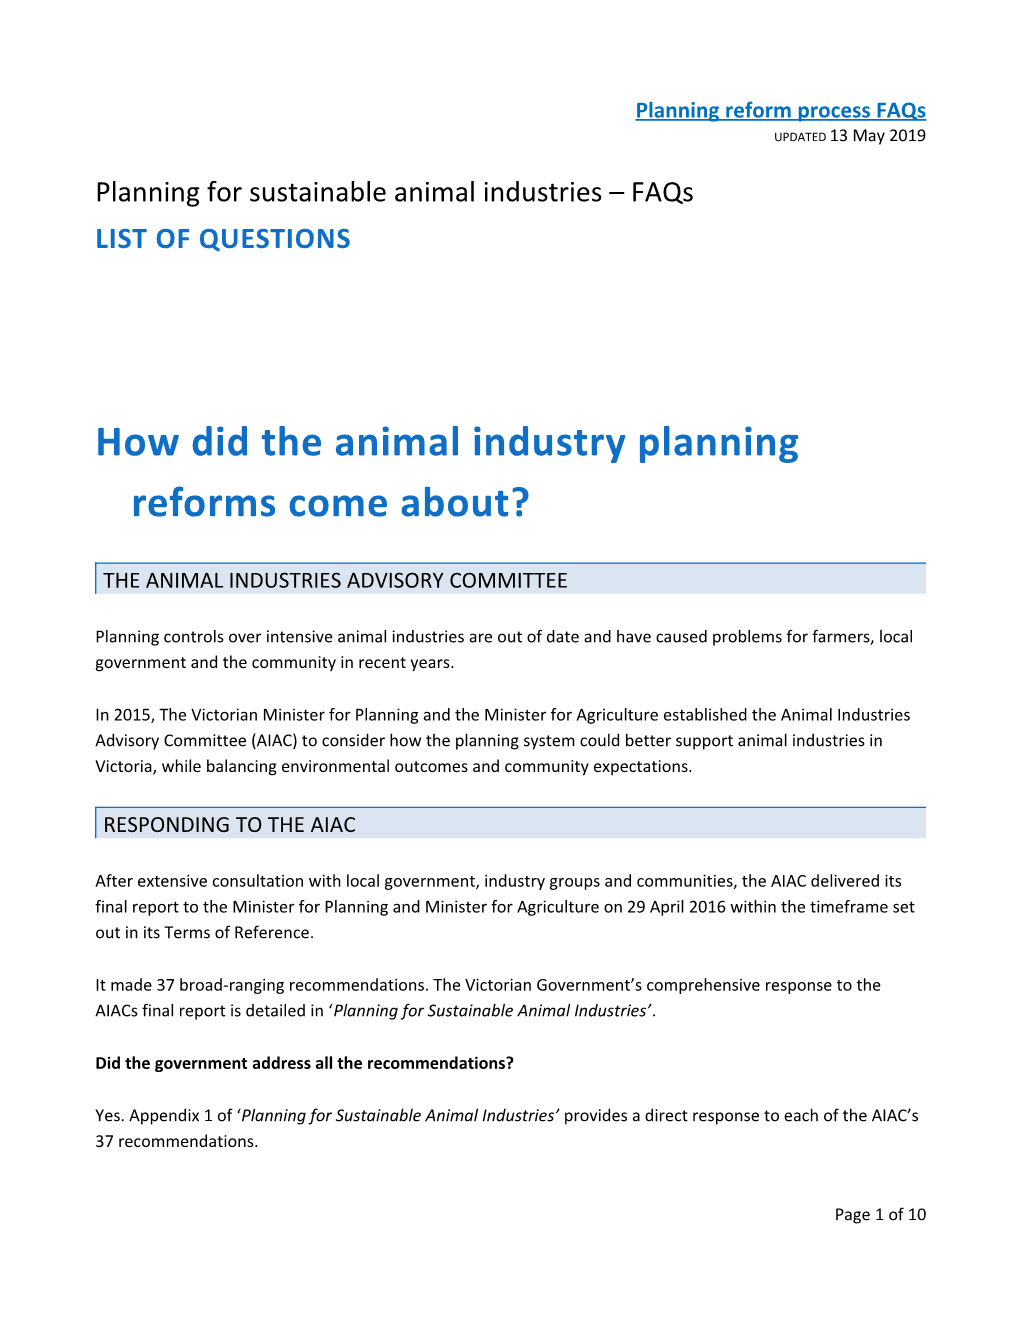 Planning Reform Process Faqs